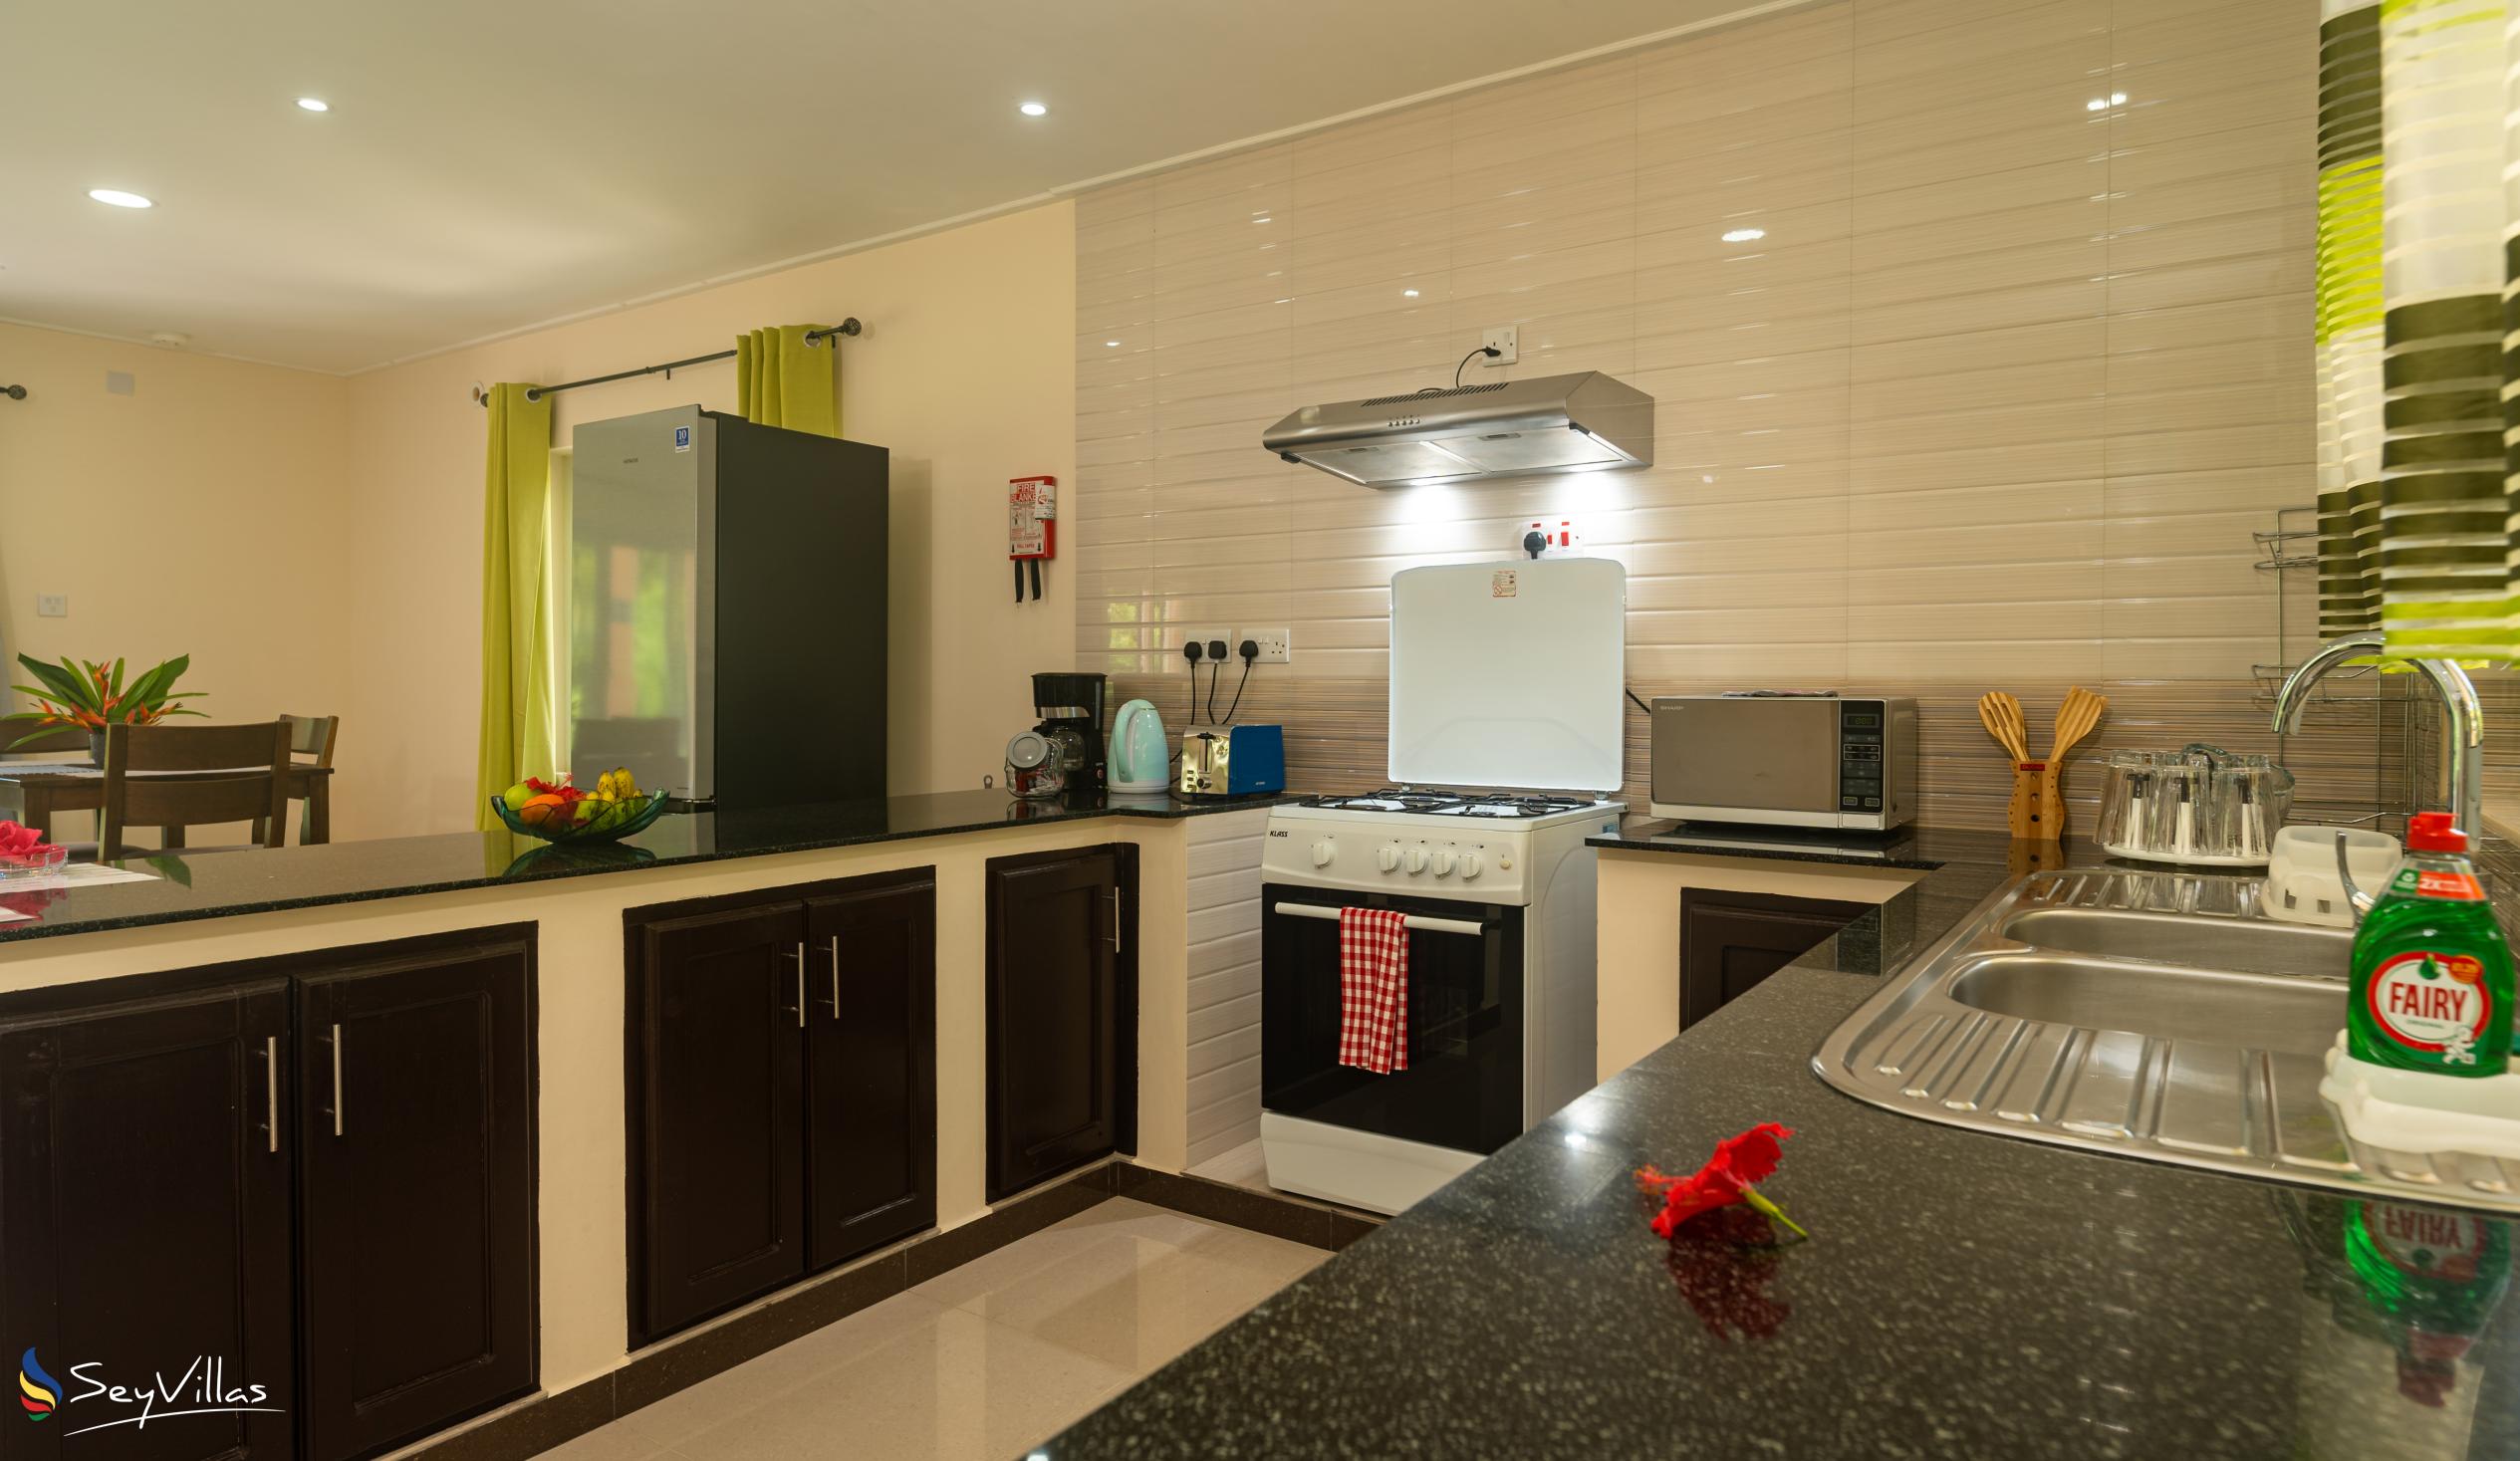 Foto 47: JAIDSS Holiday Apartments - Appartamento con 2 camere - Mahé (Seychelles)